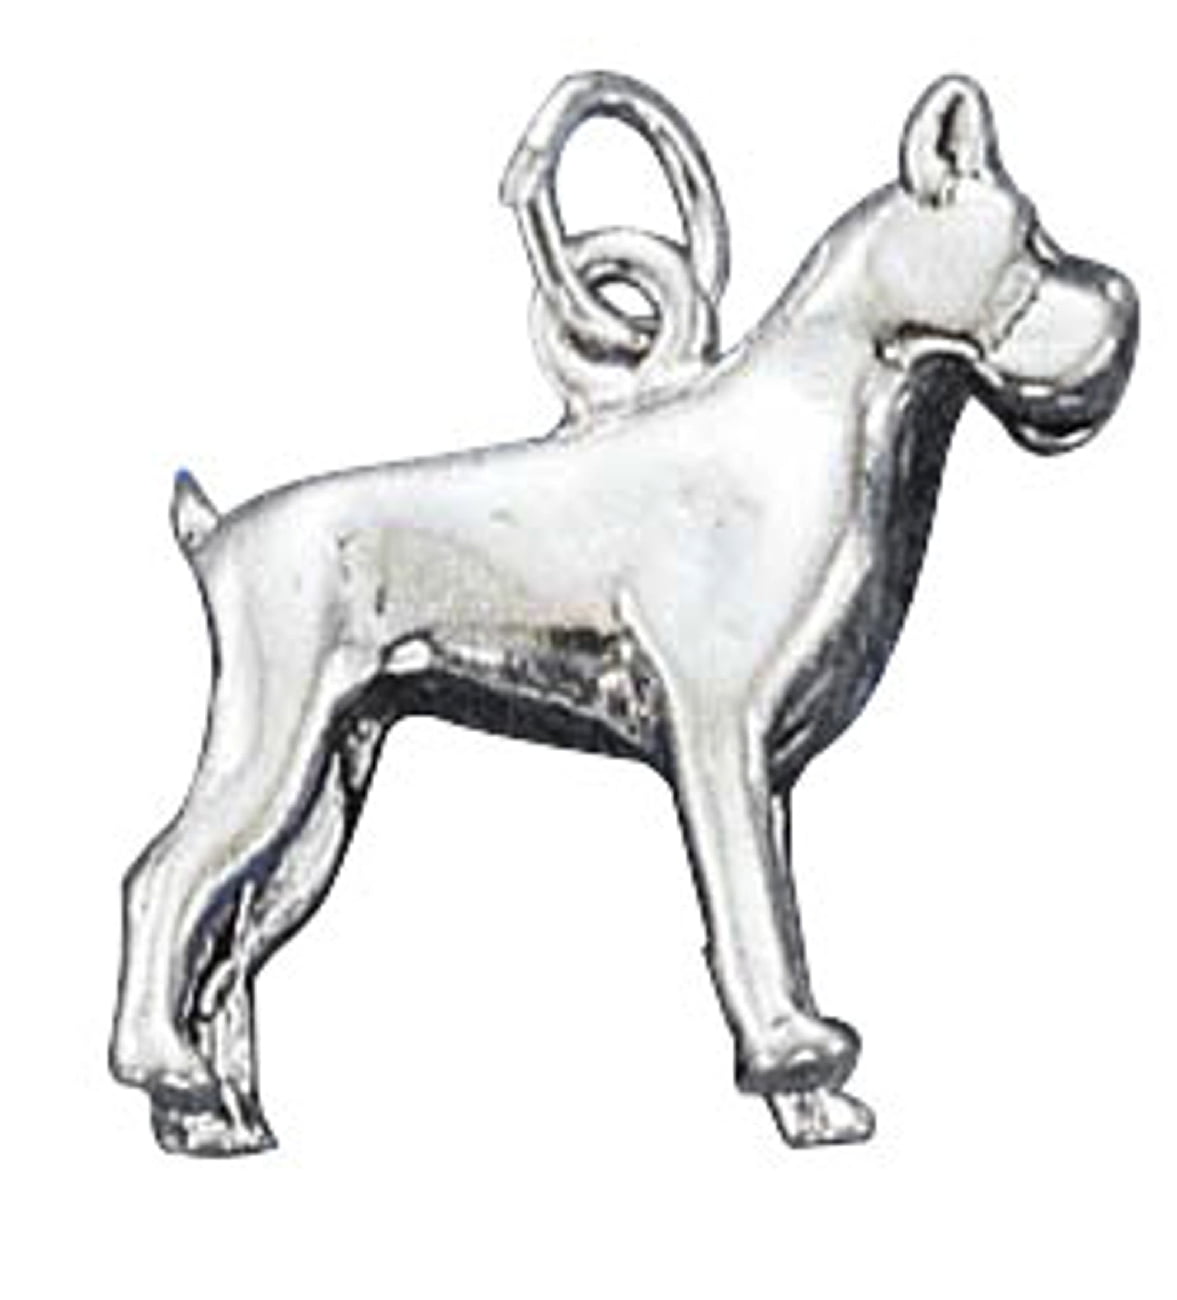 boxer dog pendant